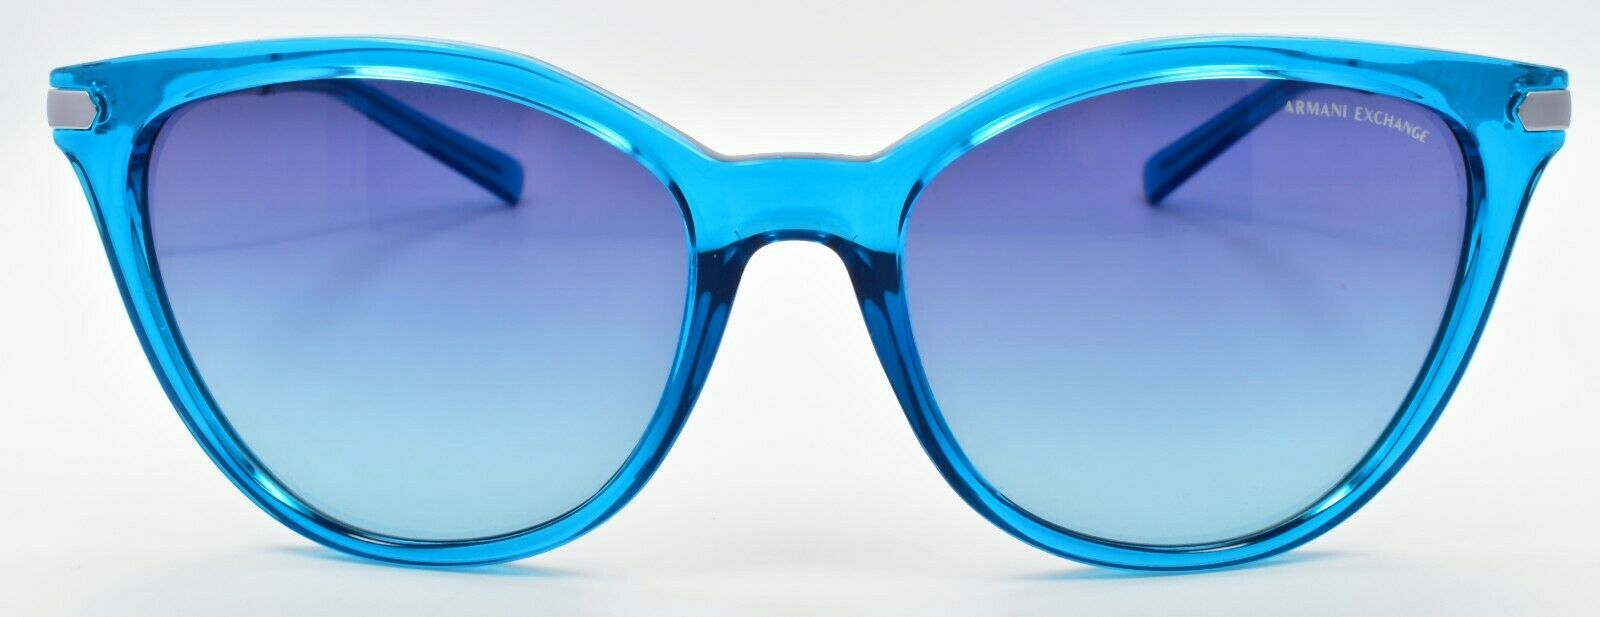 2-Armani Exchange AX4107S 82374S Women's Sunglasses Light Blue / Azure Gradient-8056597424264-IKSpecs